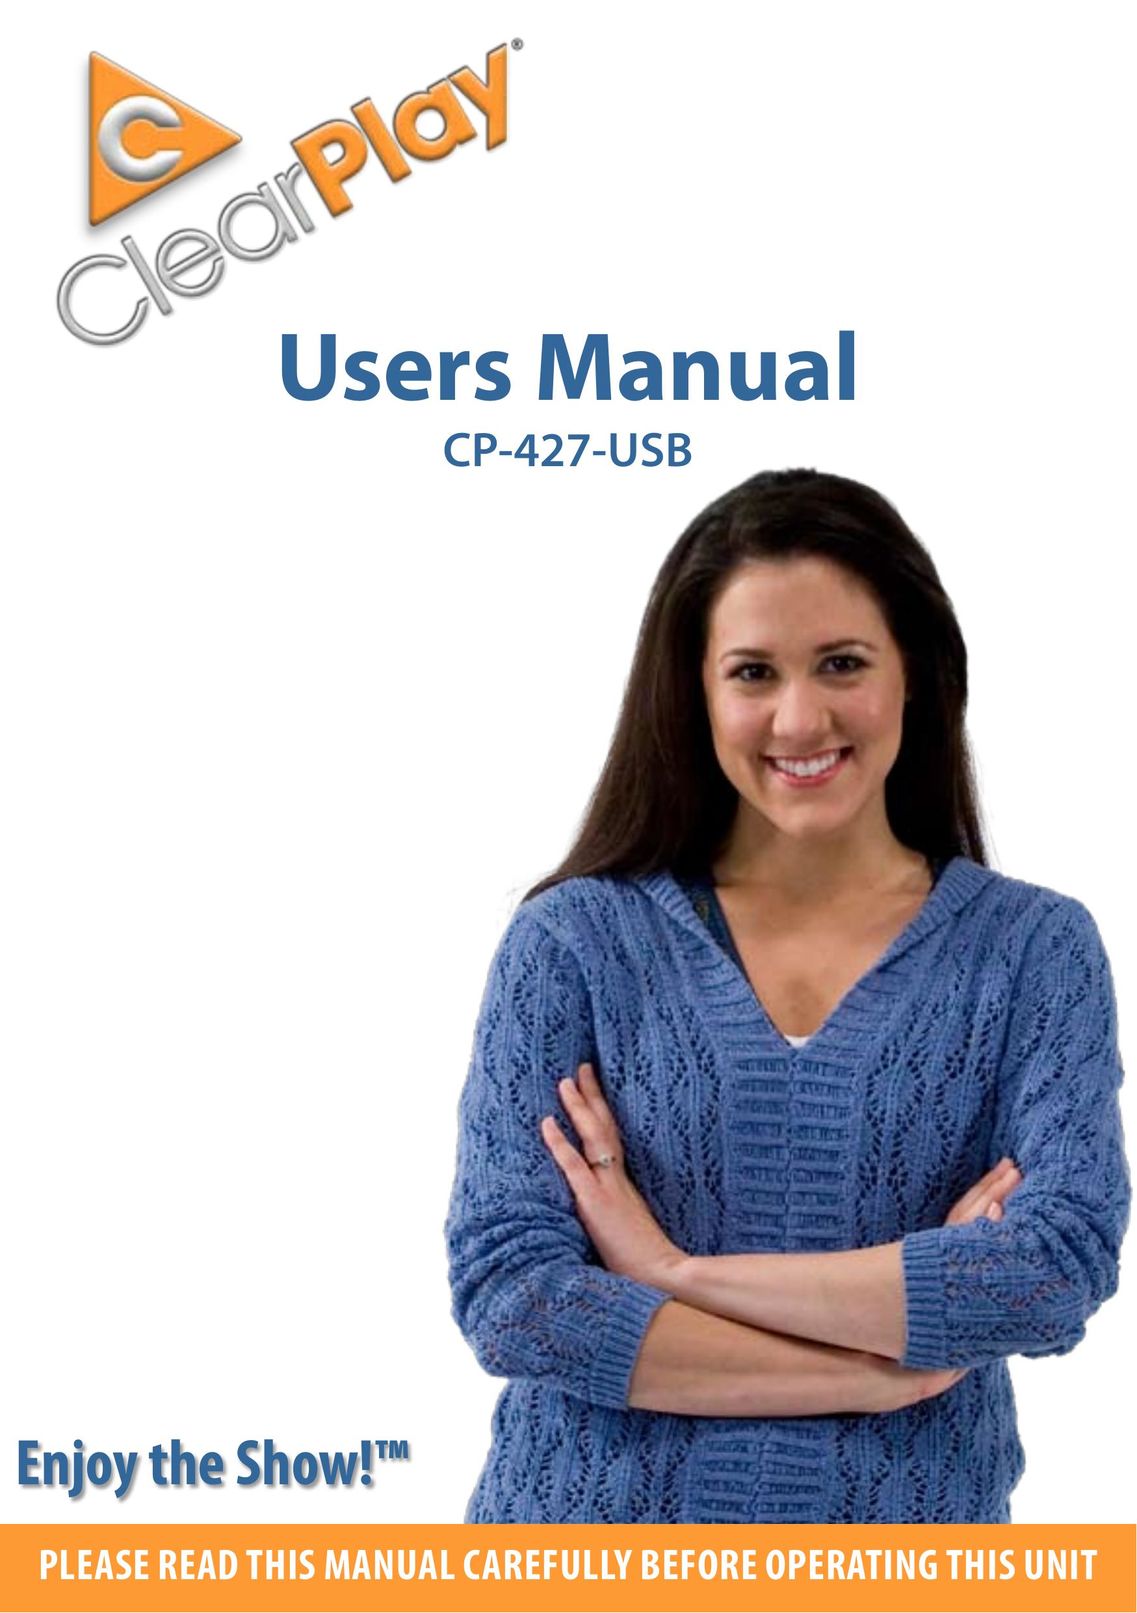 Clearplay CP-427-USB DVD Player User Manual